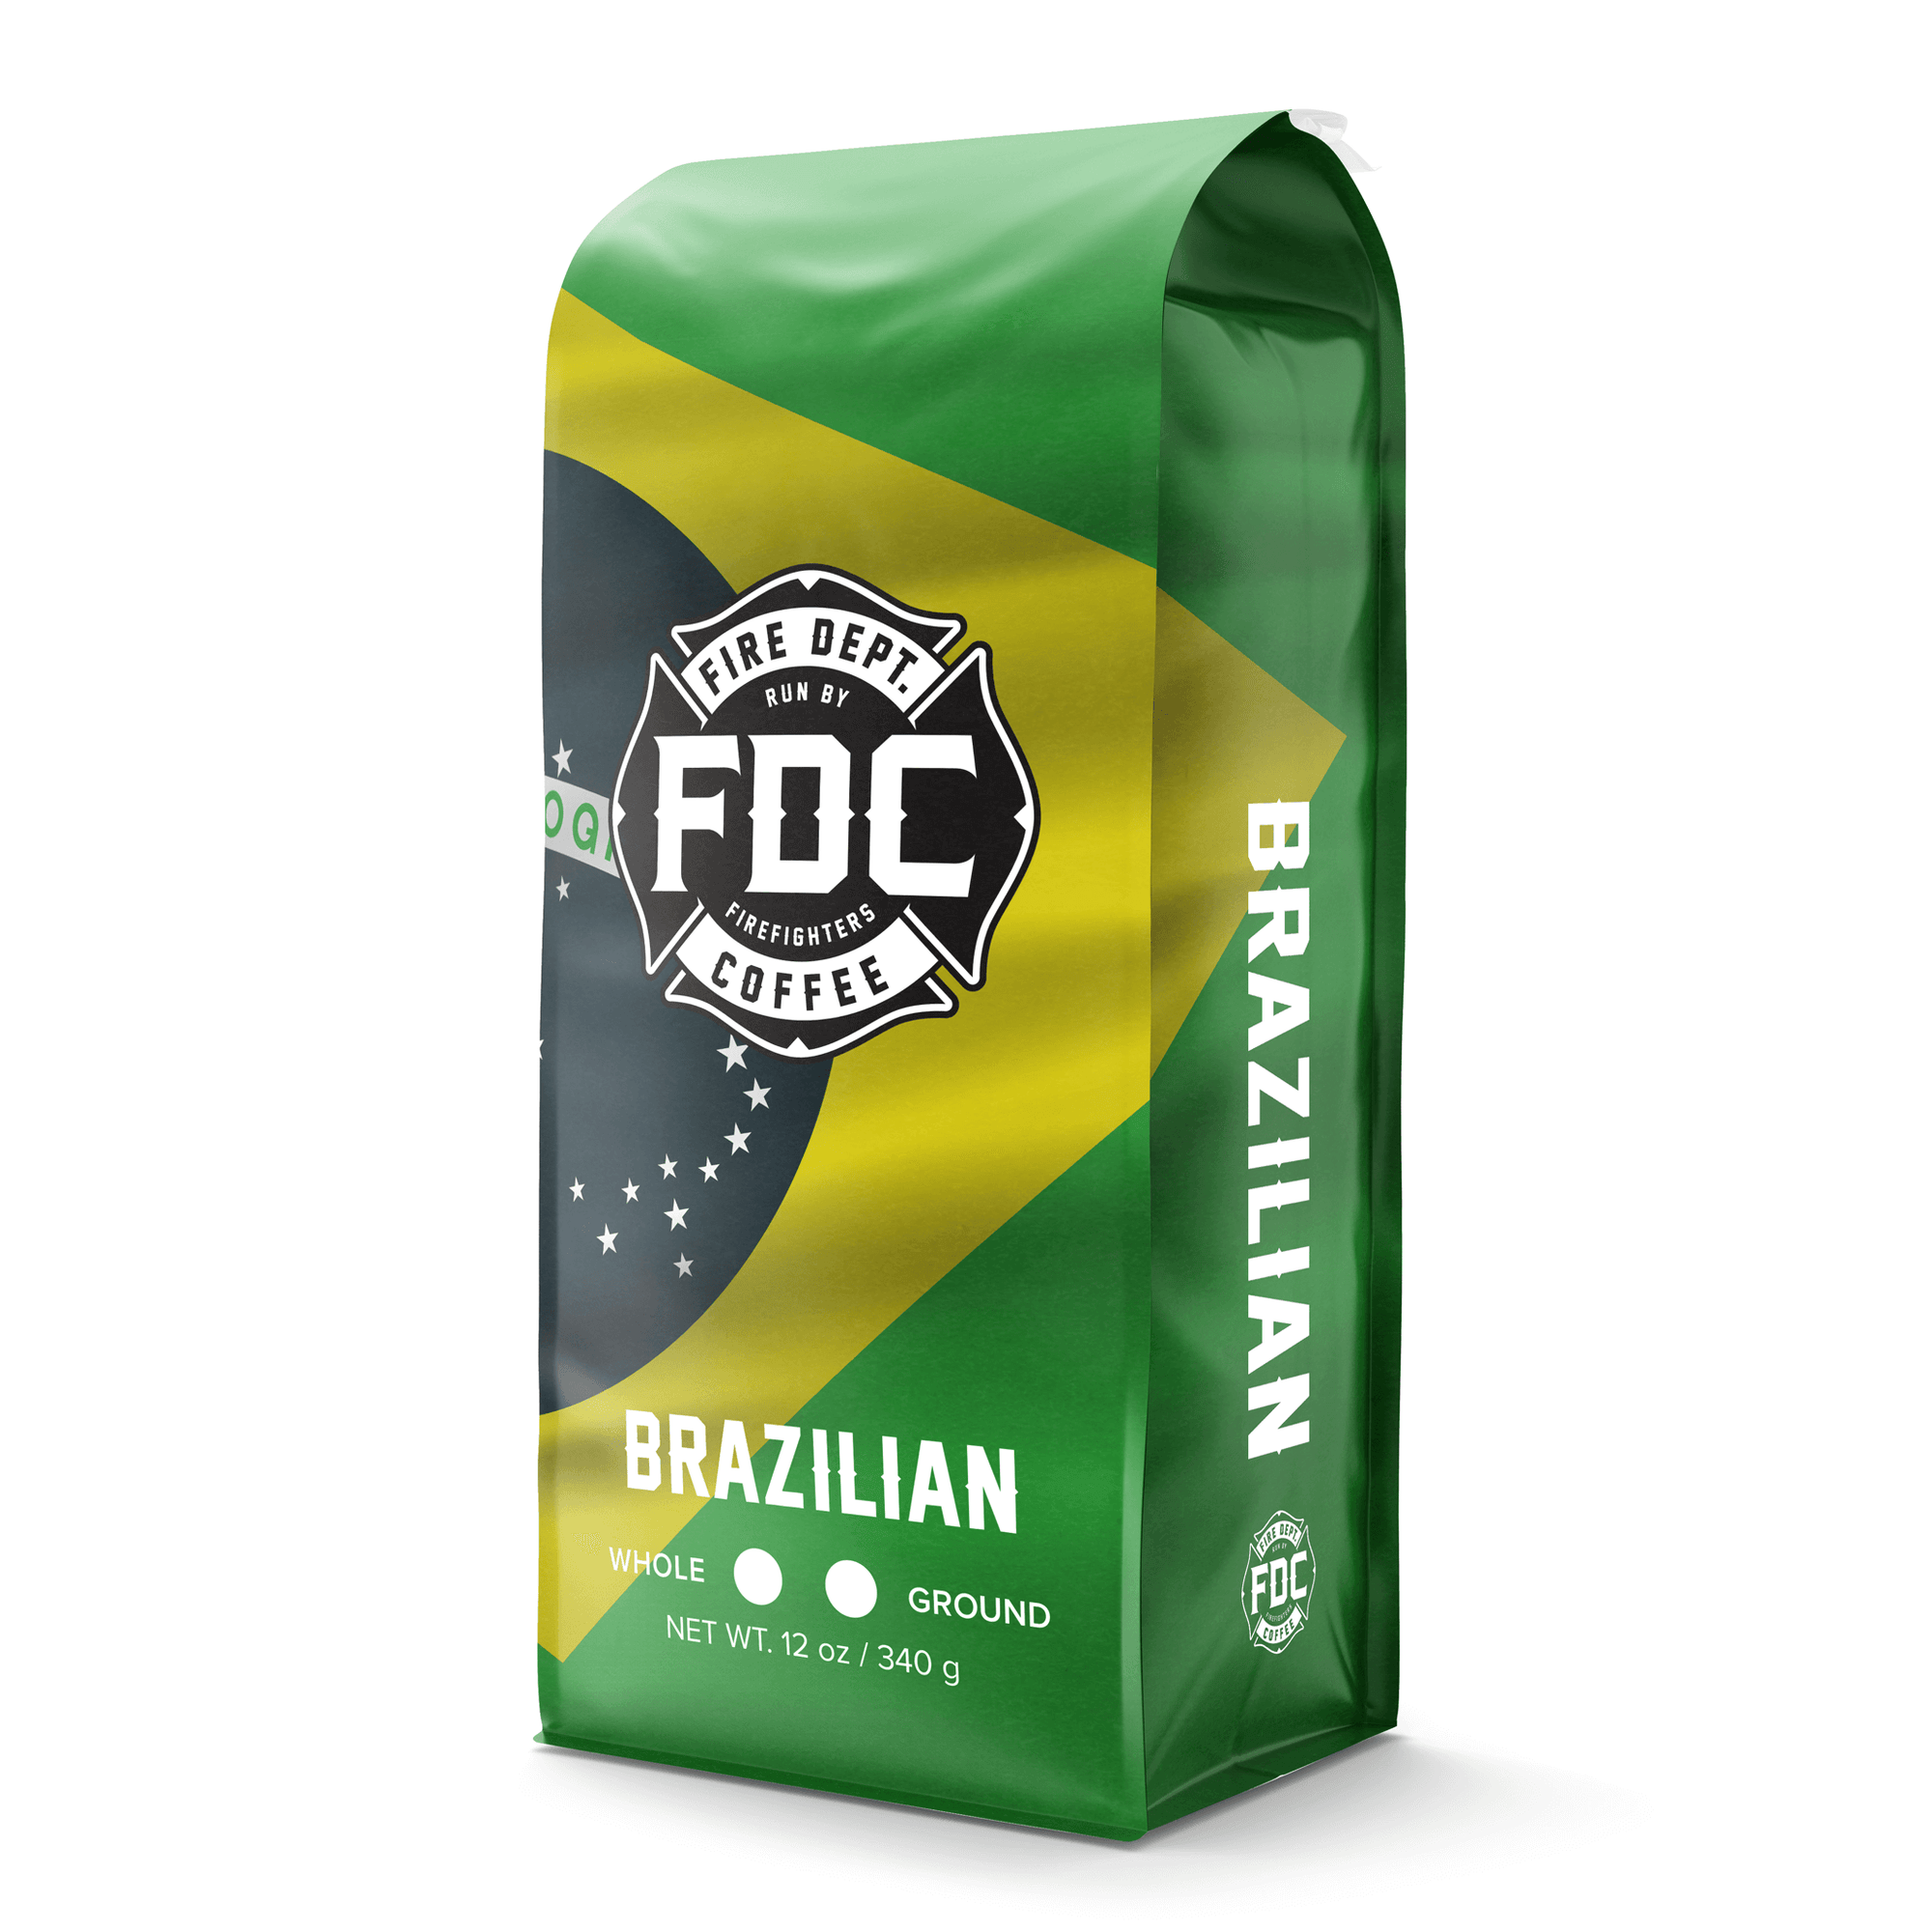 Fire Dept. Coffee's 12 ounce Brazilian Coffee in a rectangular package